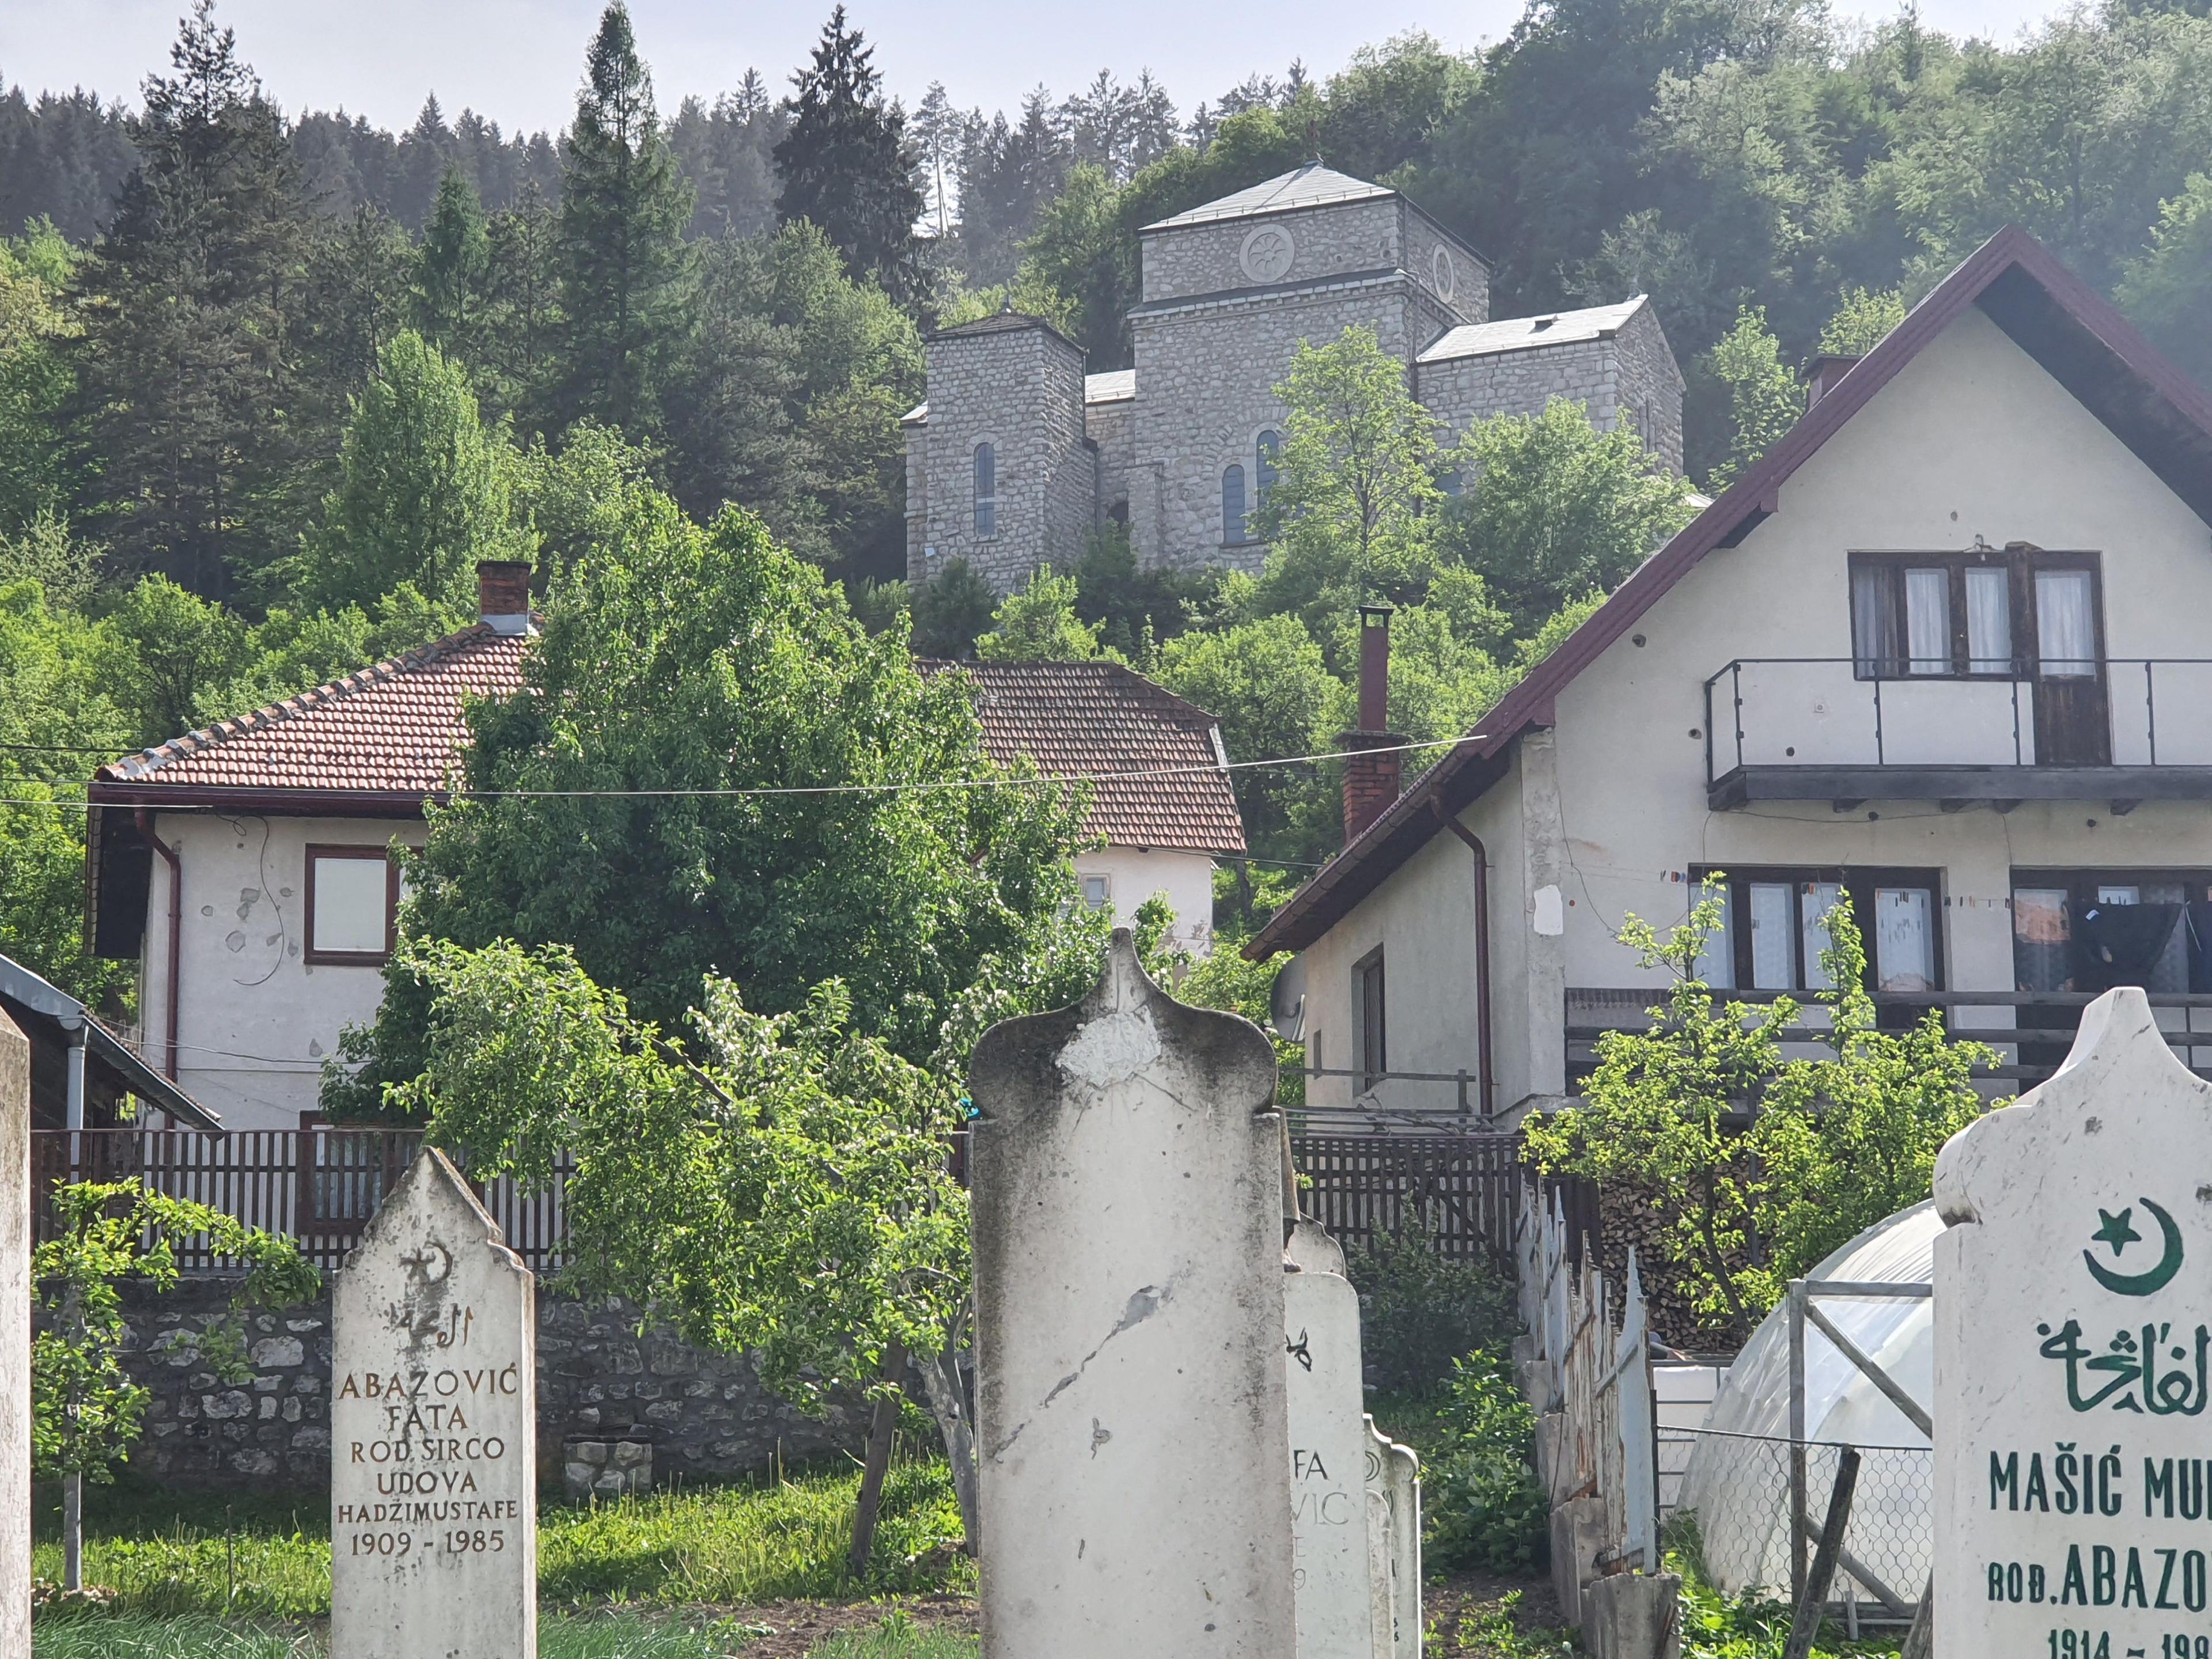 Prava slika Bosne - Avaz